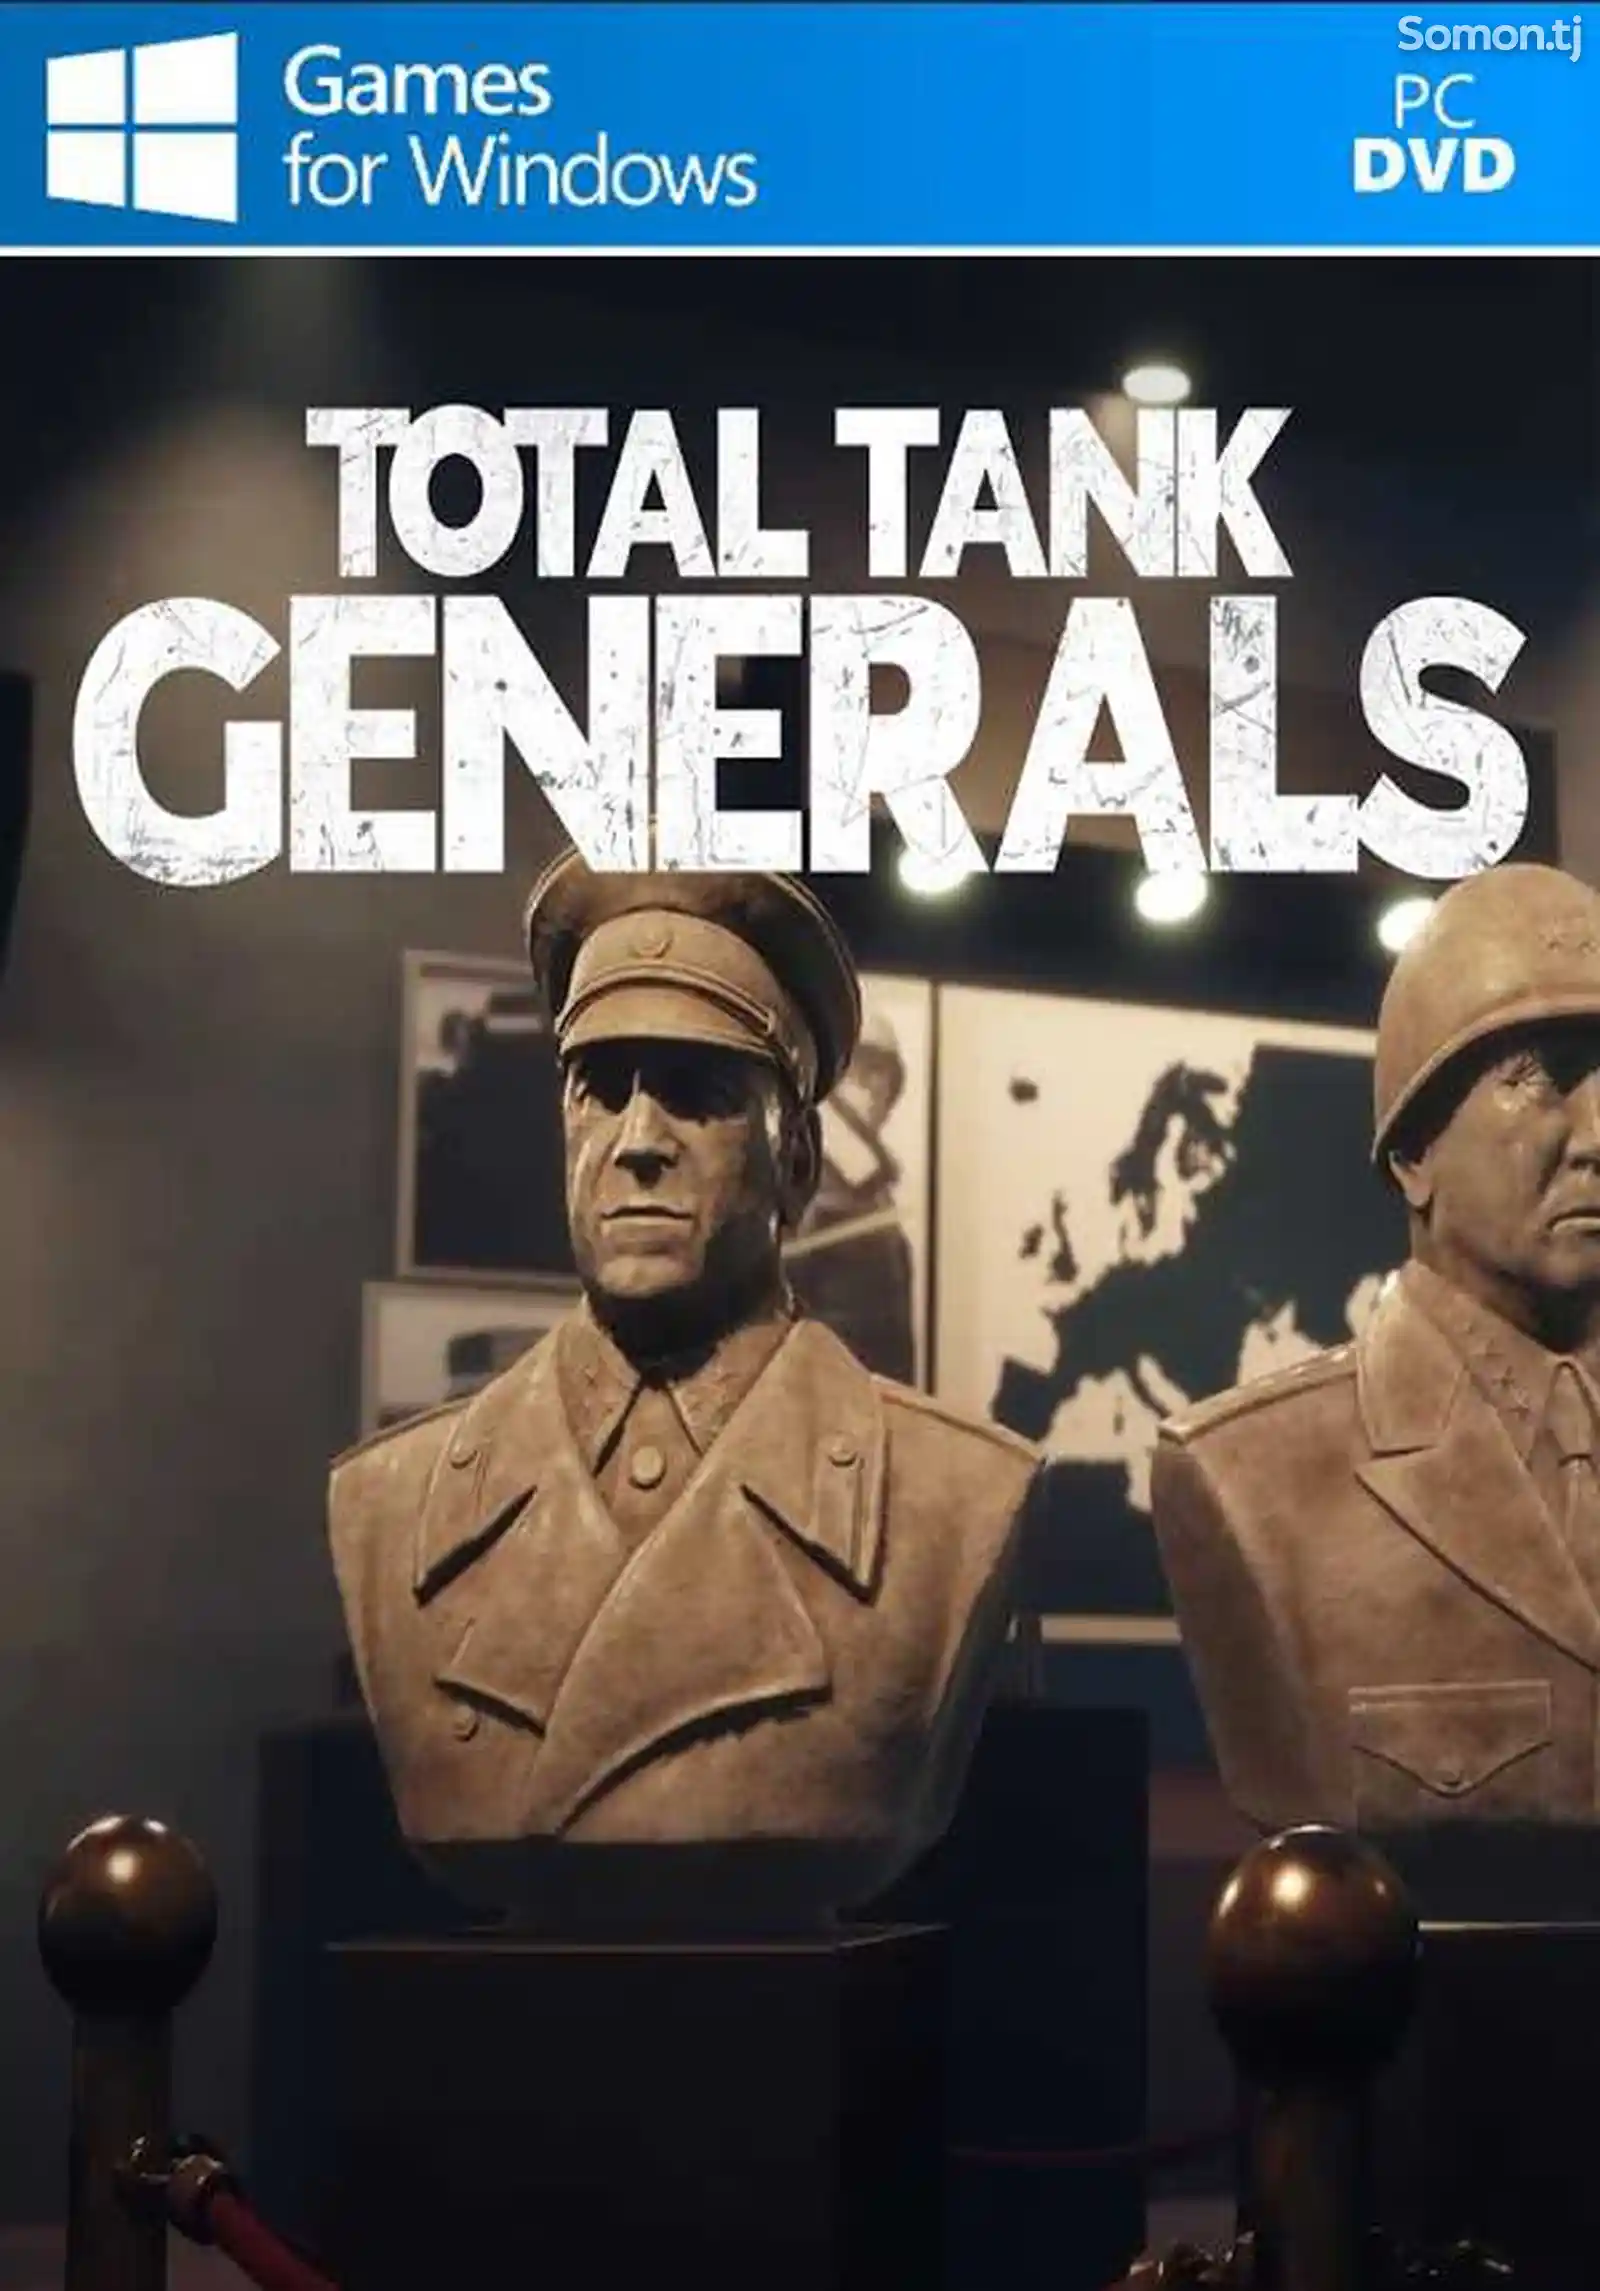 Игра Total tank generals для компьютера-пк-pc-1